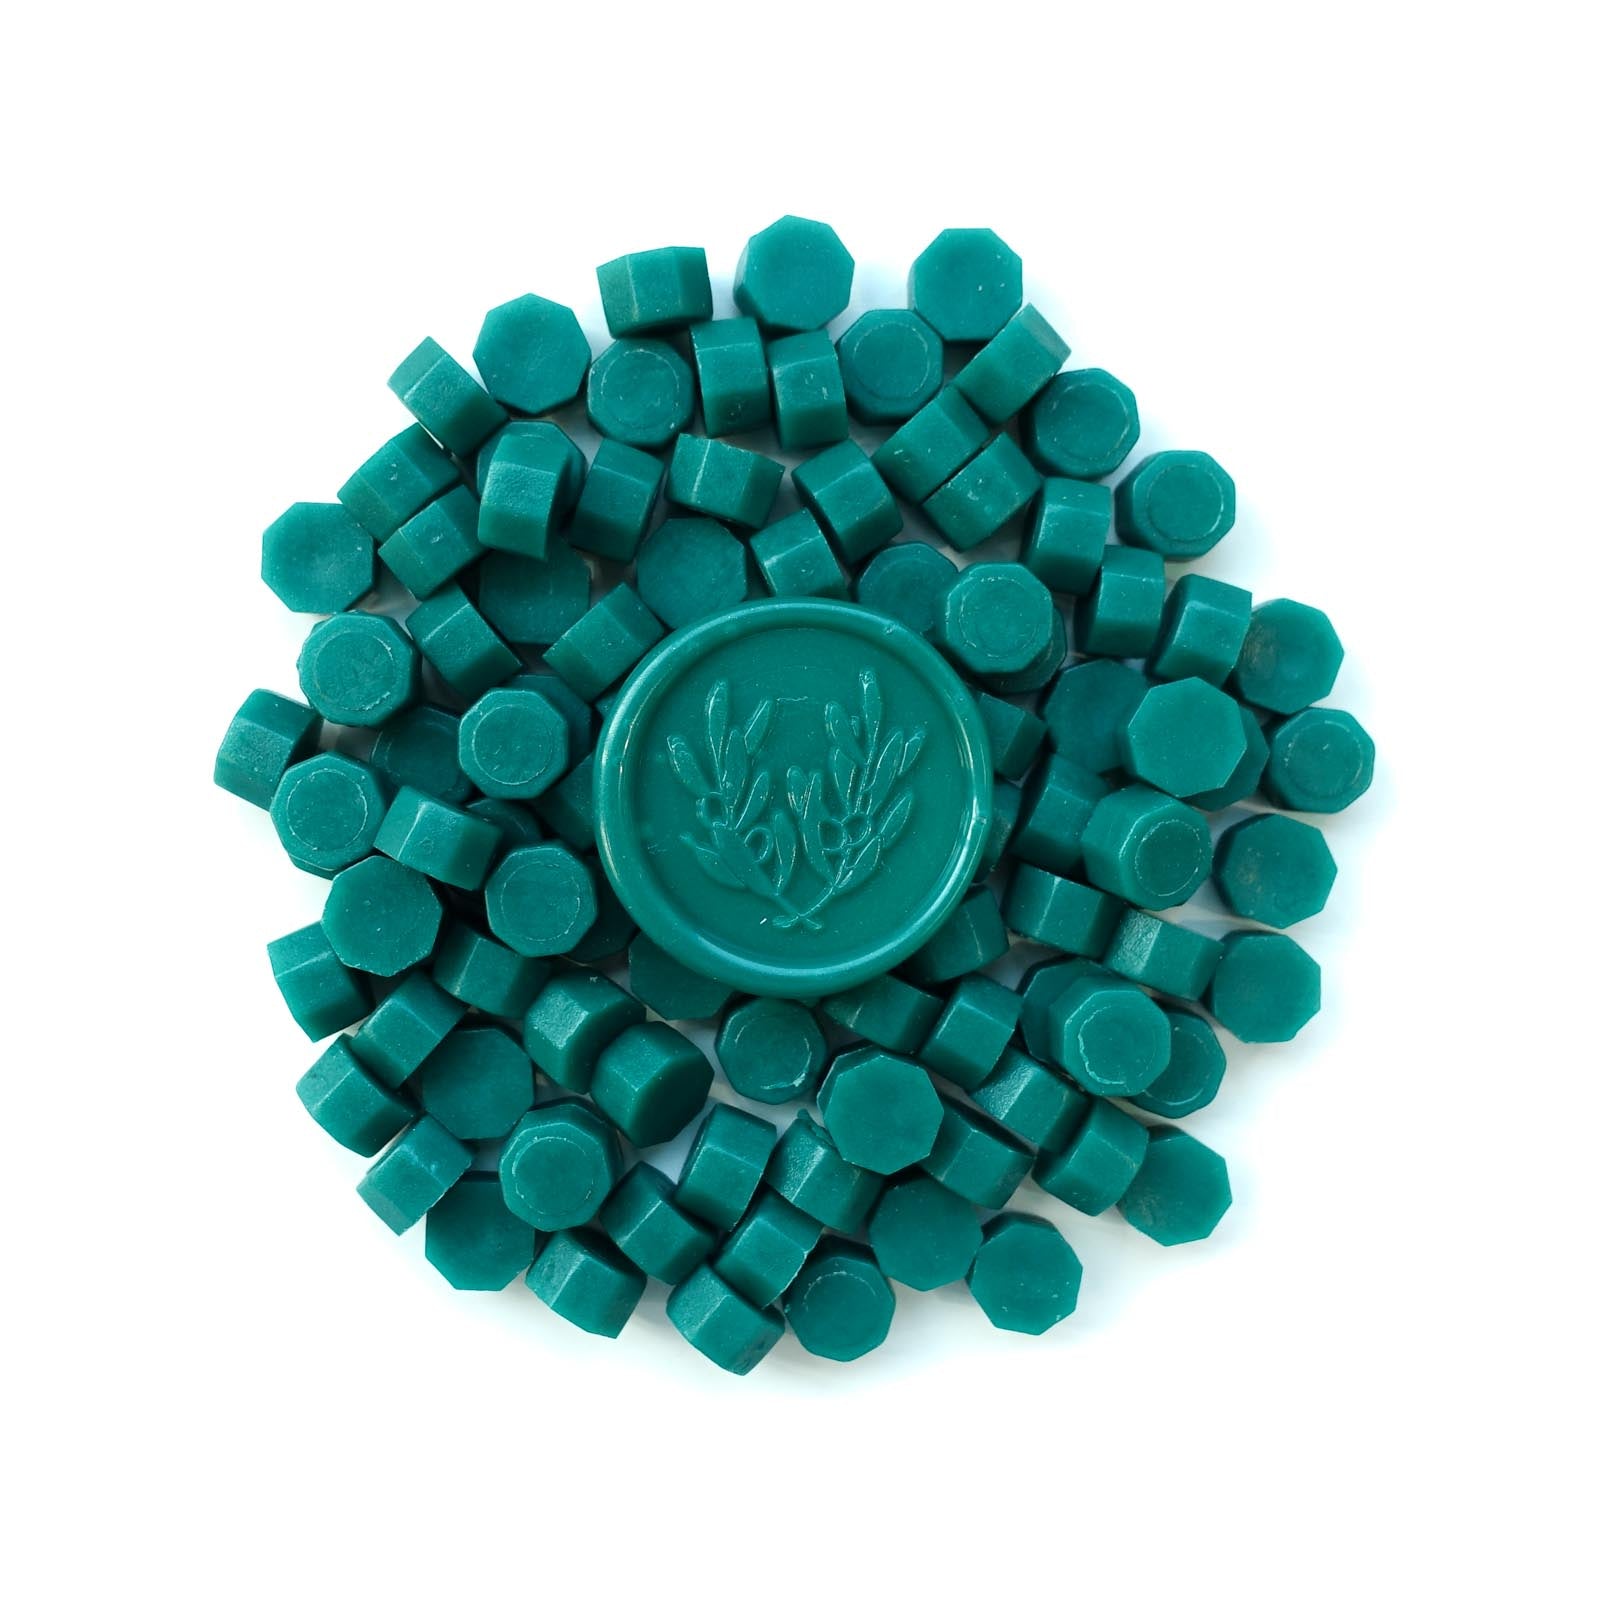 Bottle Green 100pcs sealing wax beads granules tablets pellets